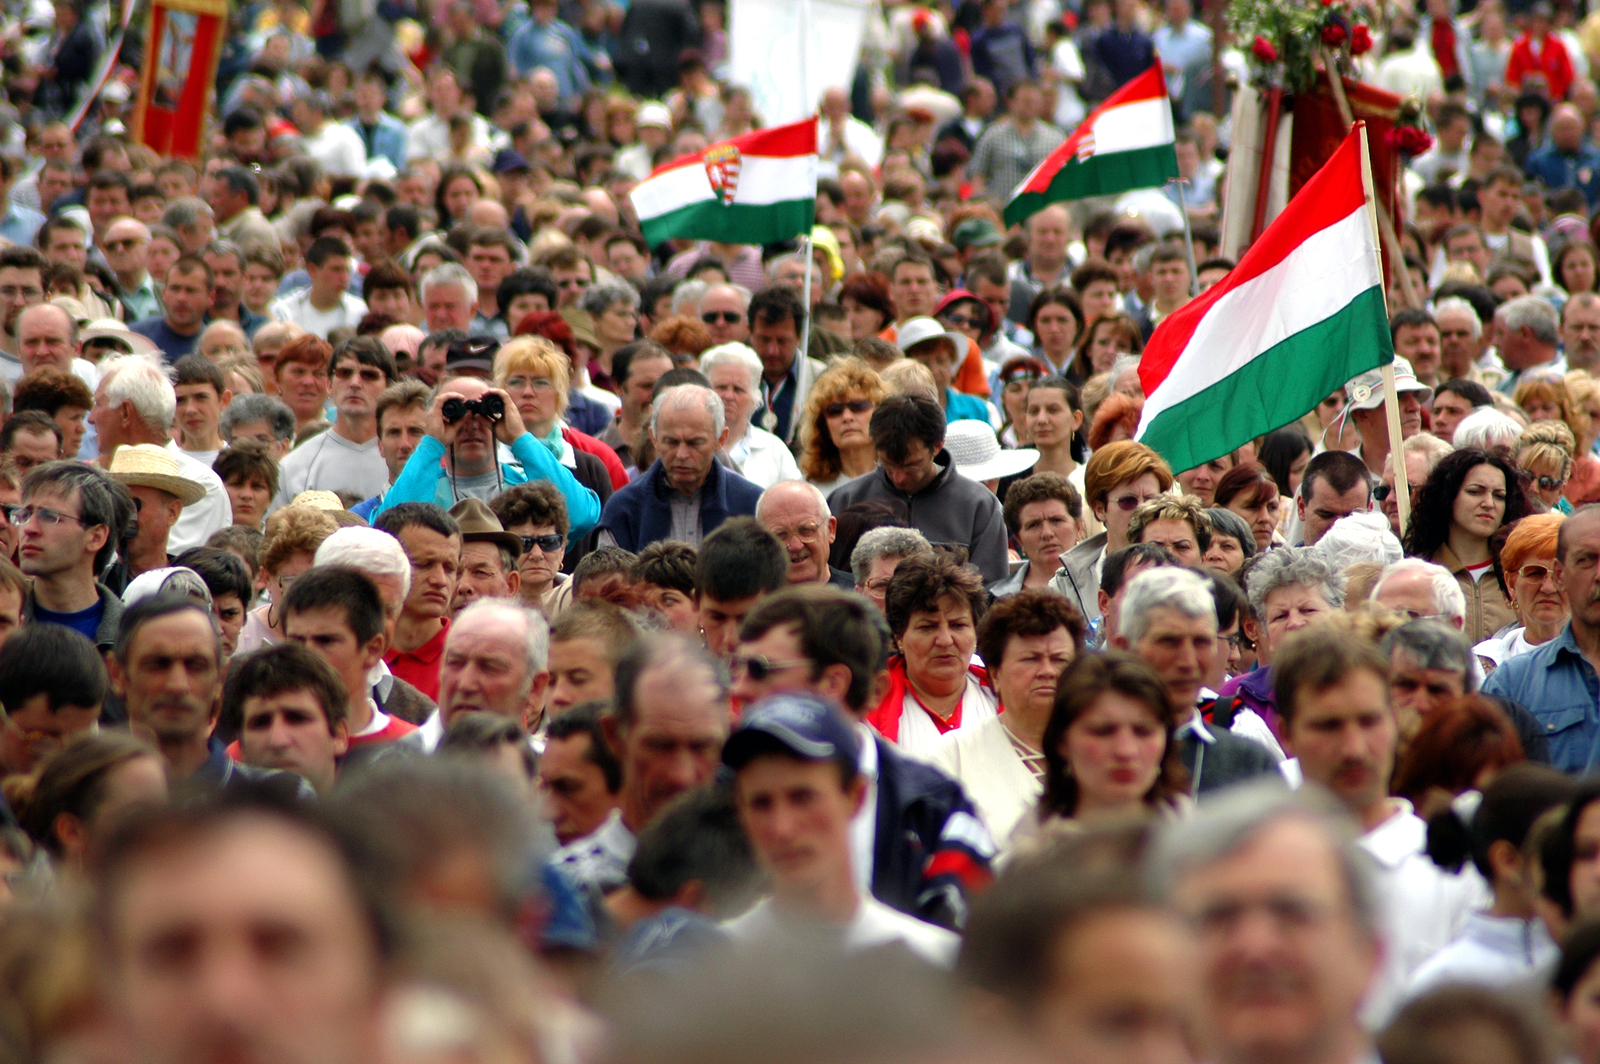 New report reveals Hungary's creeping influence on Transylvania media market - Emerging Europe